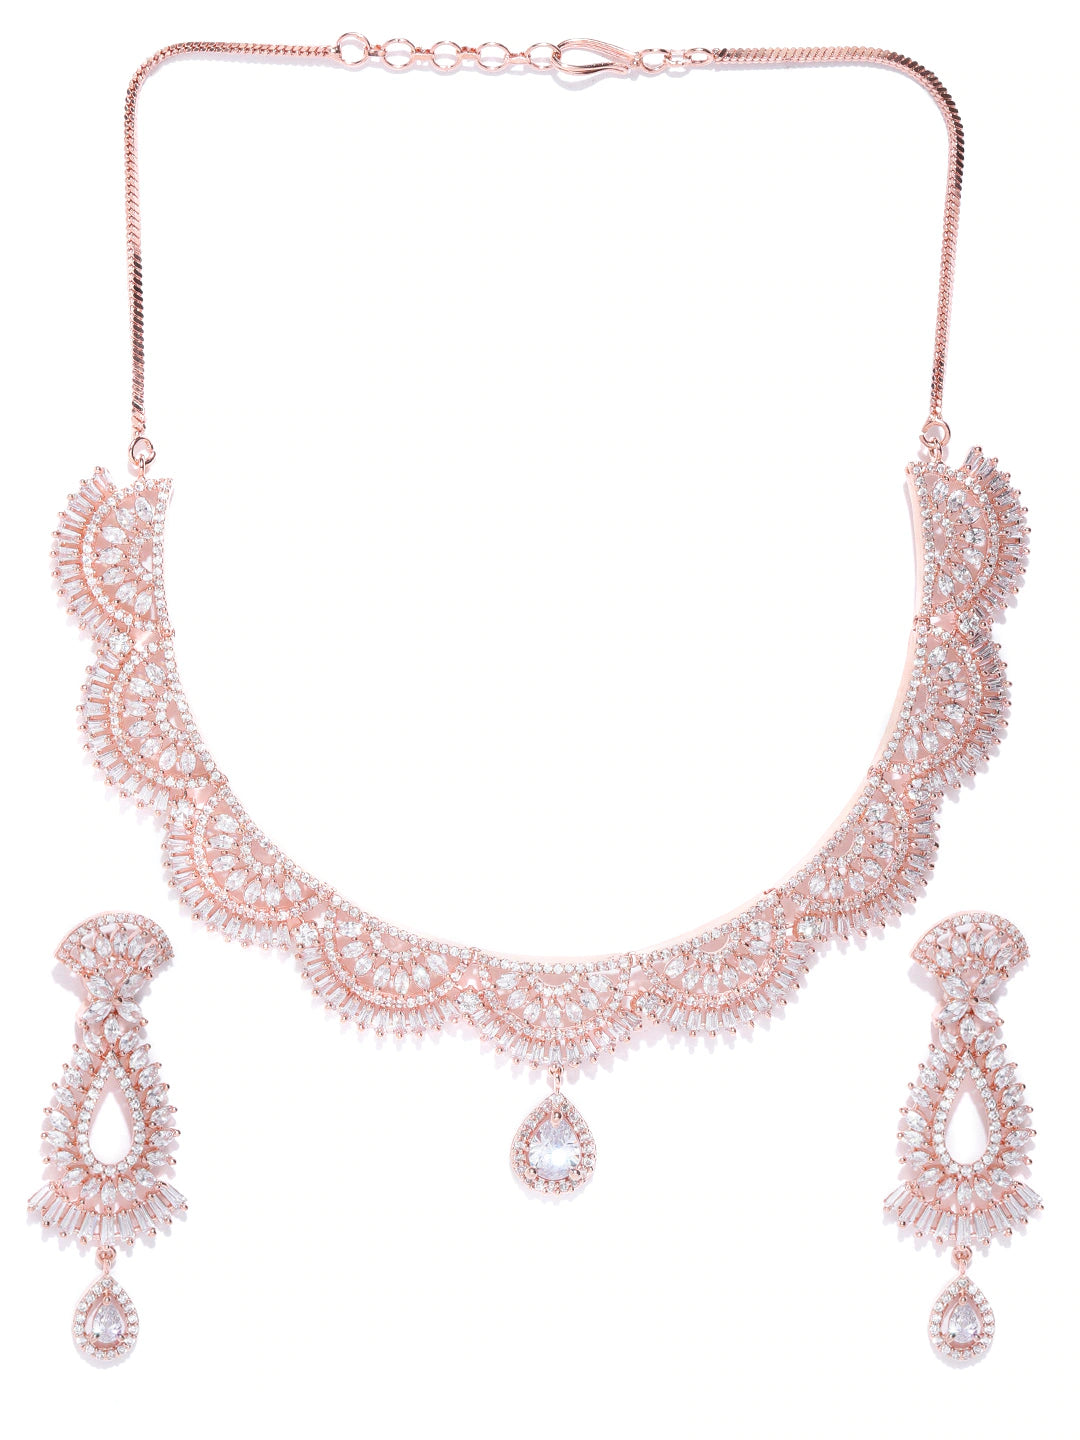 Rose Gold AD Necklace Set for Women and Girls - Aviksha Creations